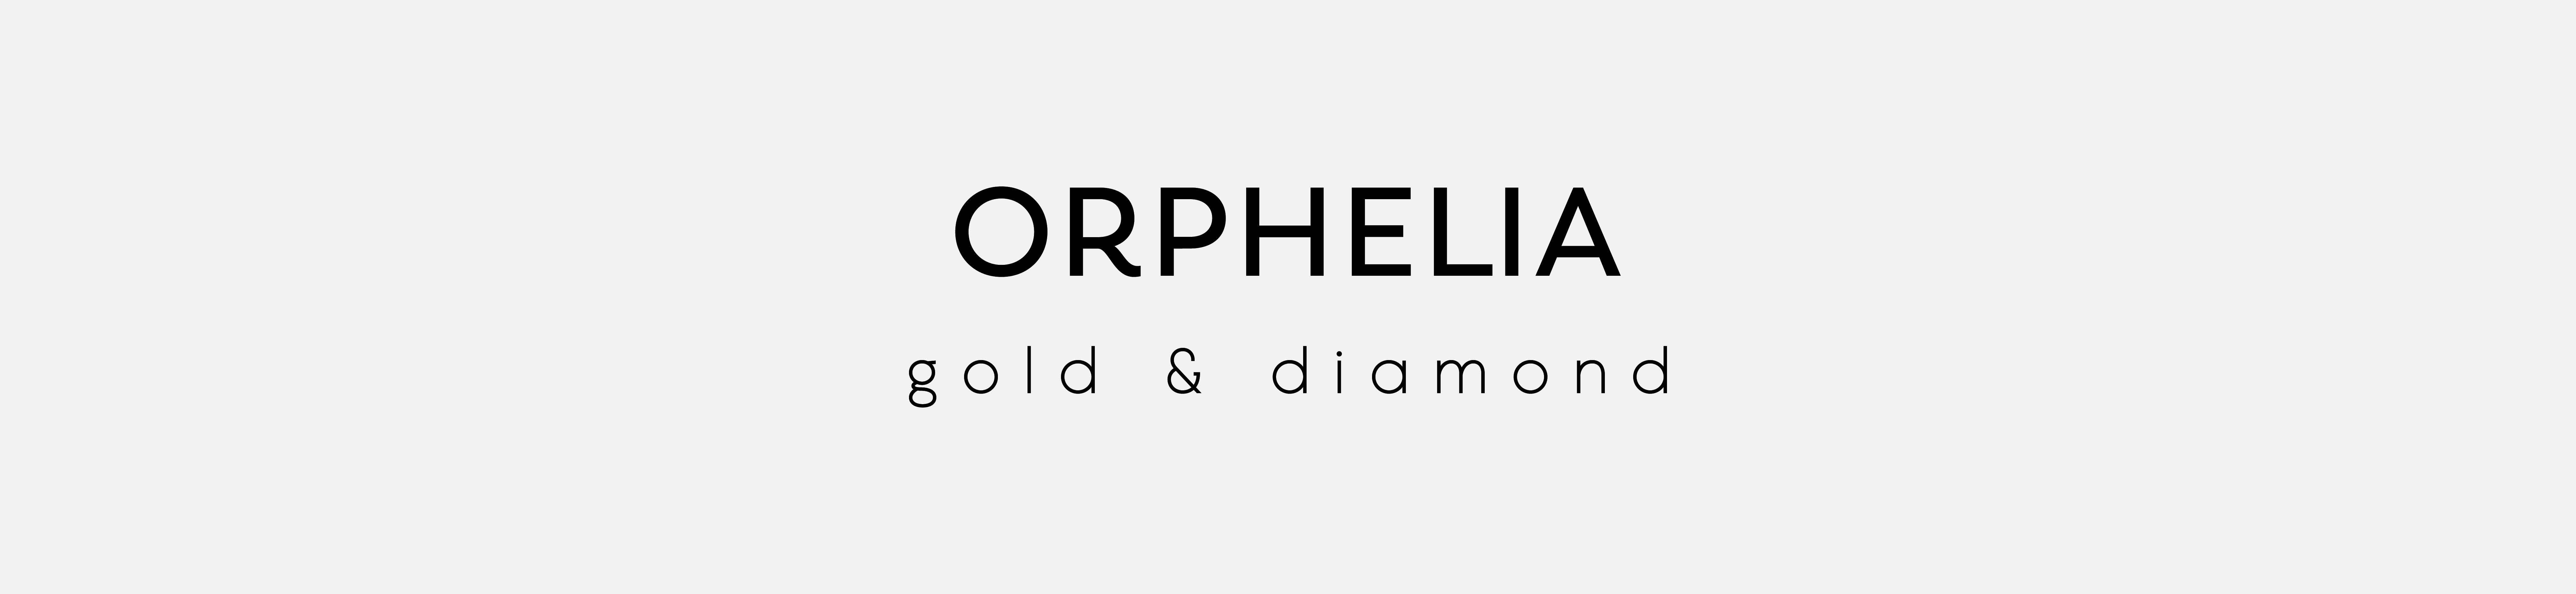 Orphelia Gold & Diamond